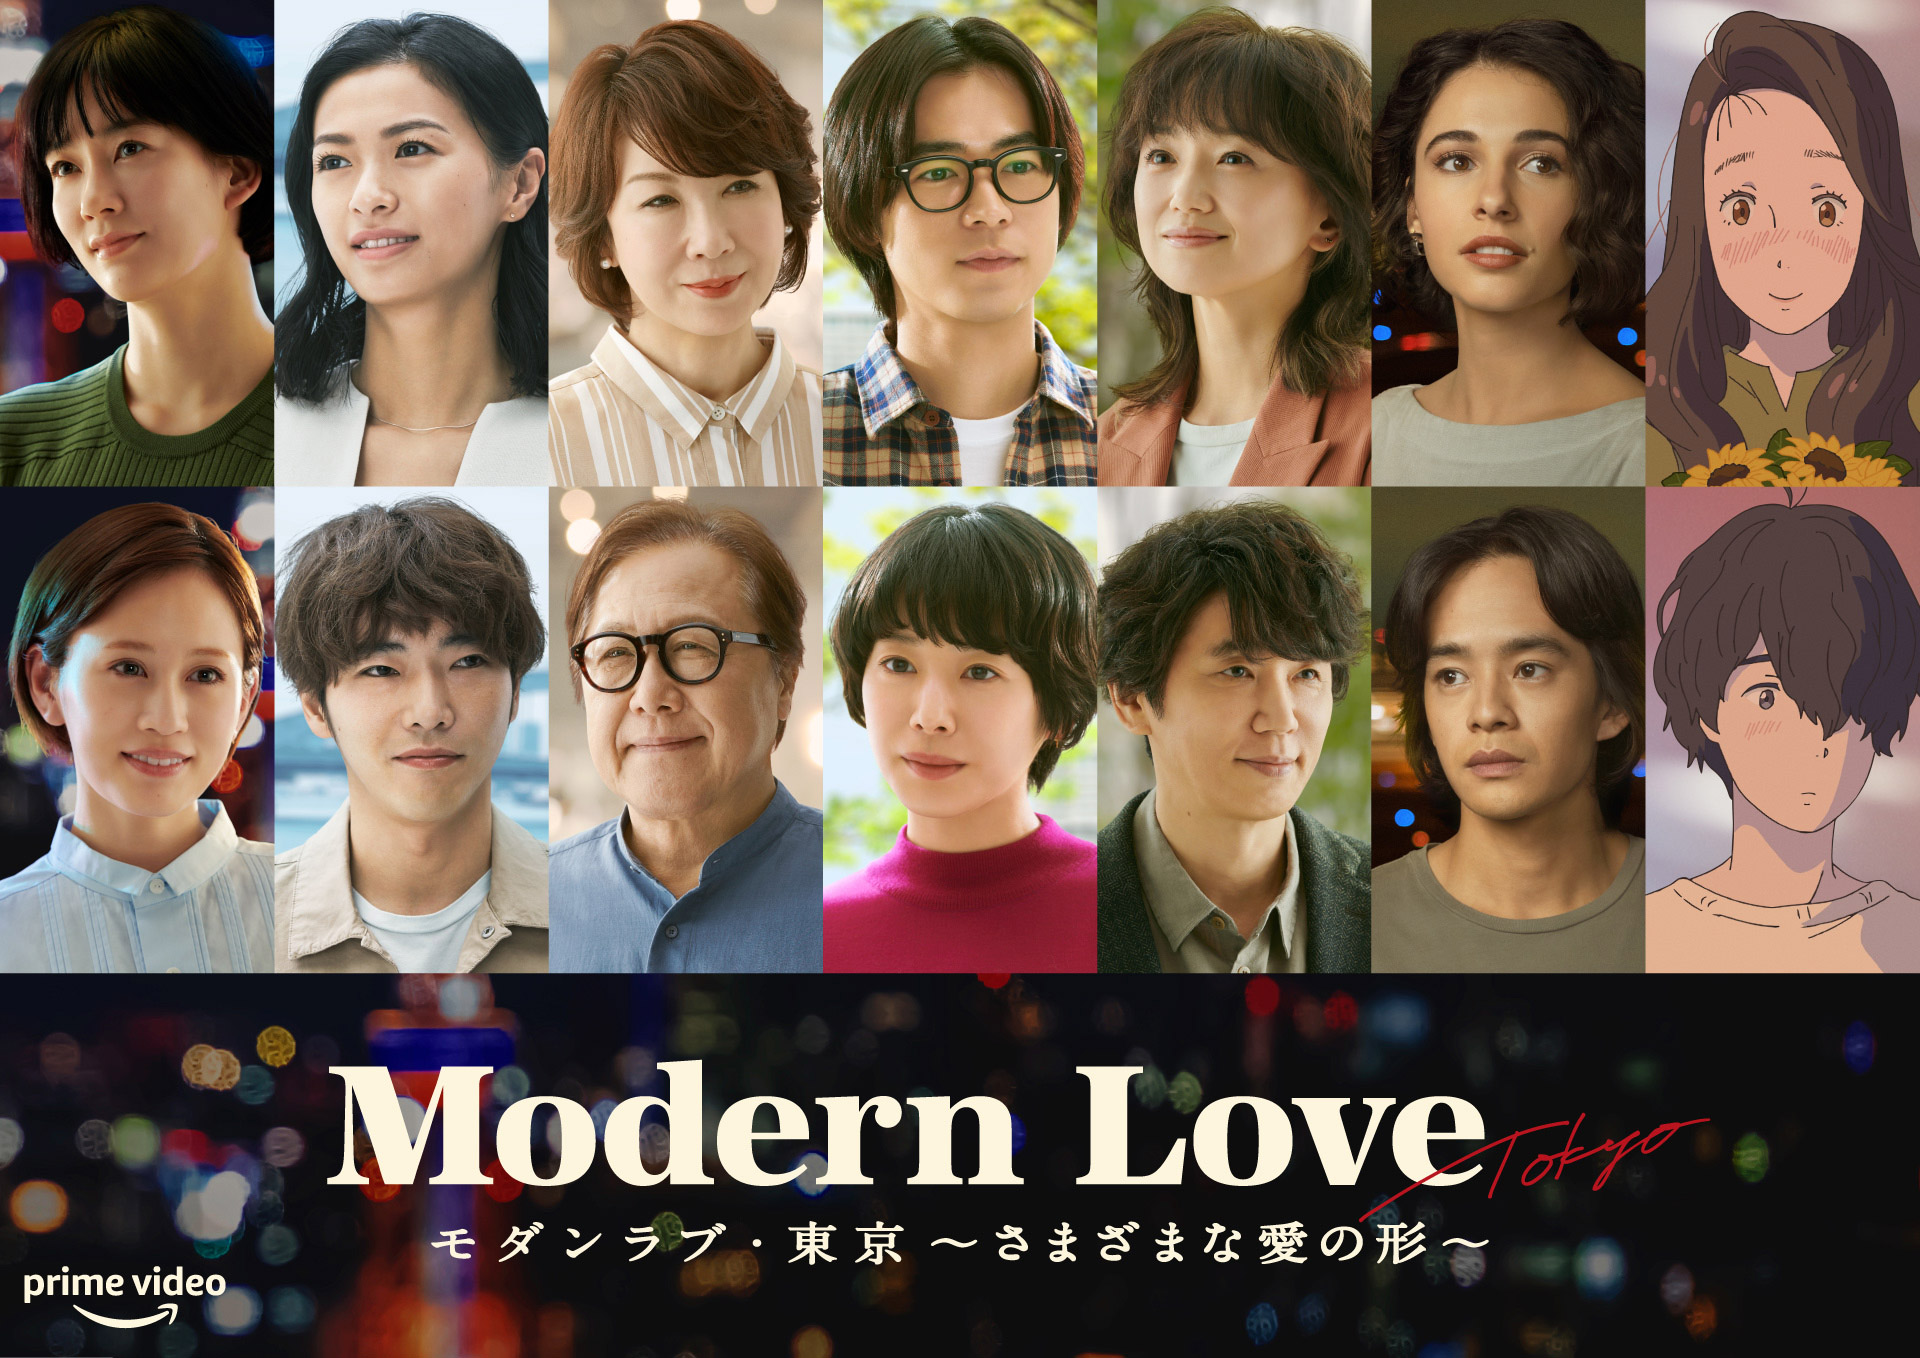 Modern Love Tokyo - Poster [credit: Copyright Amazon Studios]